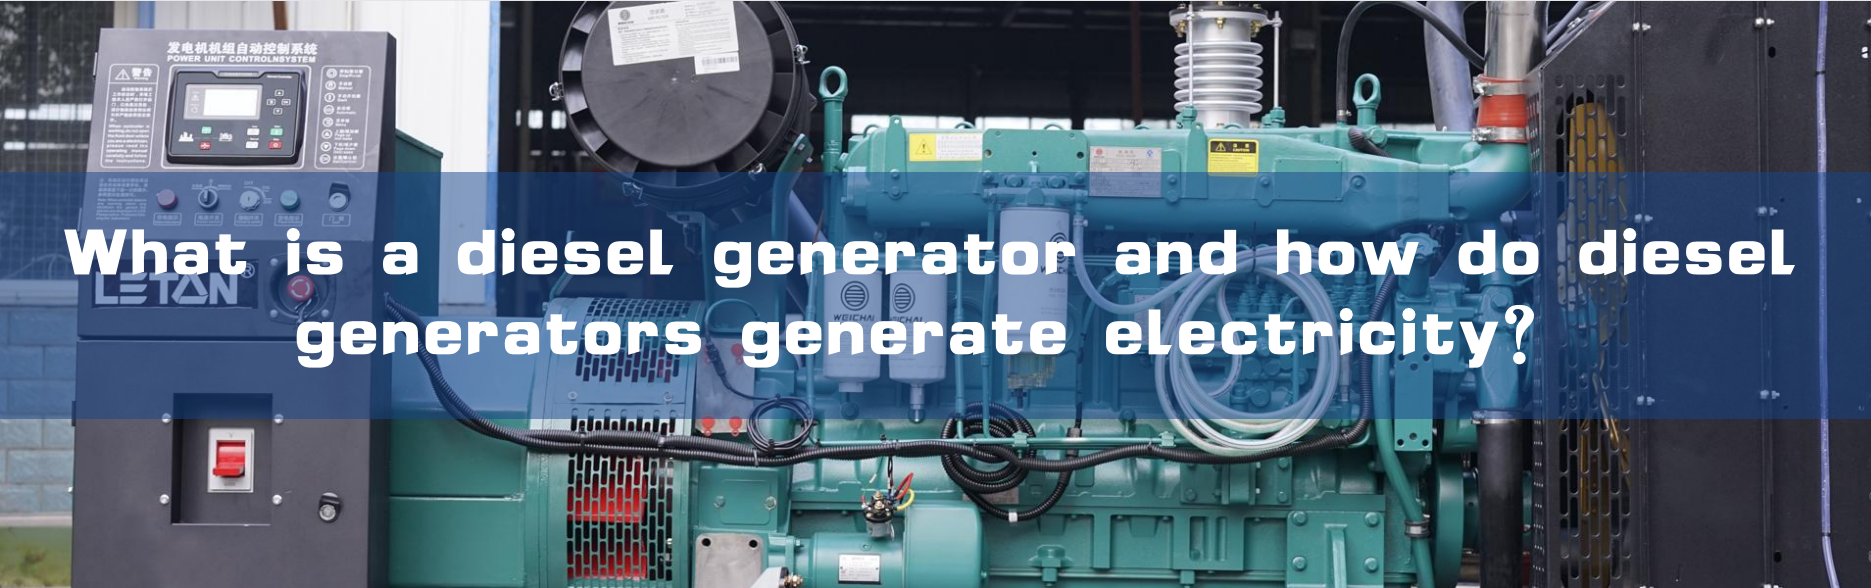 Hvad er en dieselgenerator, og hvordan genererer dieselgeneratorer elektricitet?